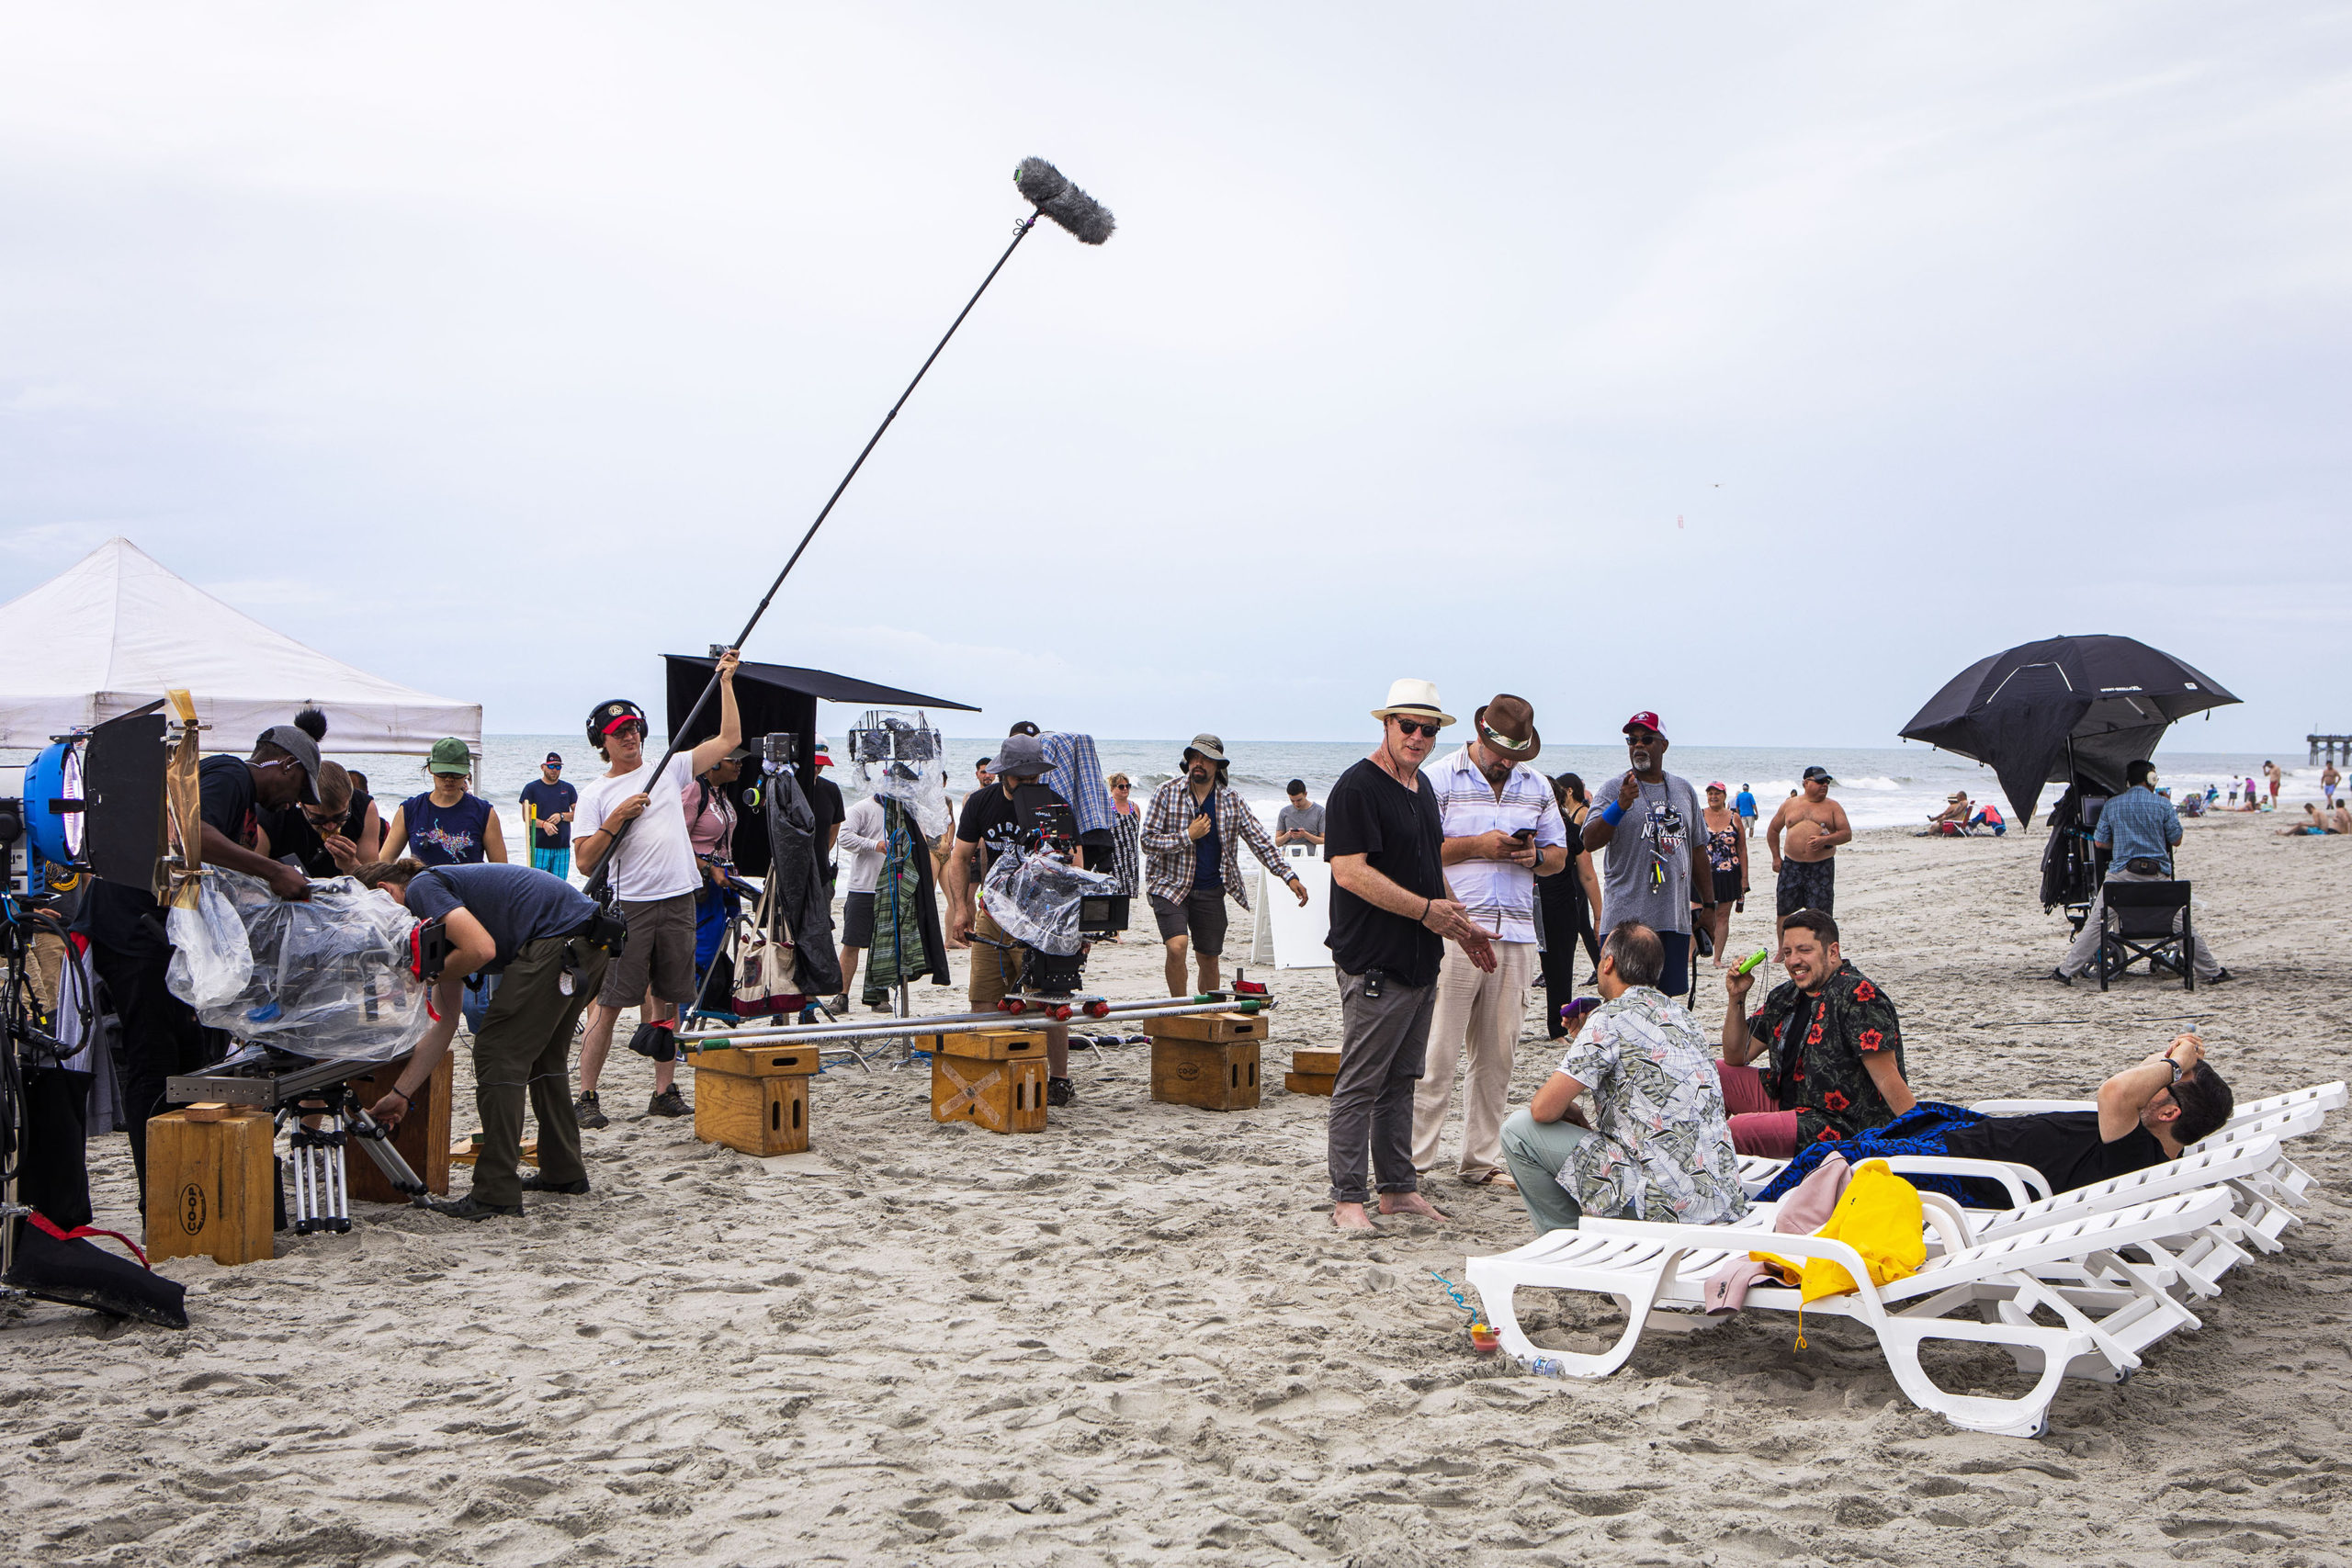 impractical jokers filming movie near myrtle beach